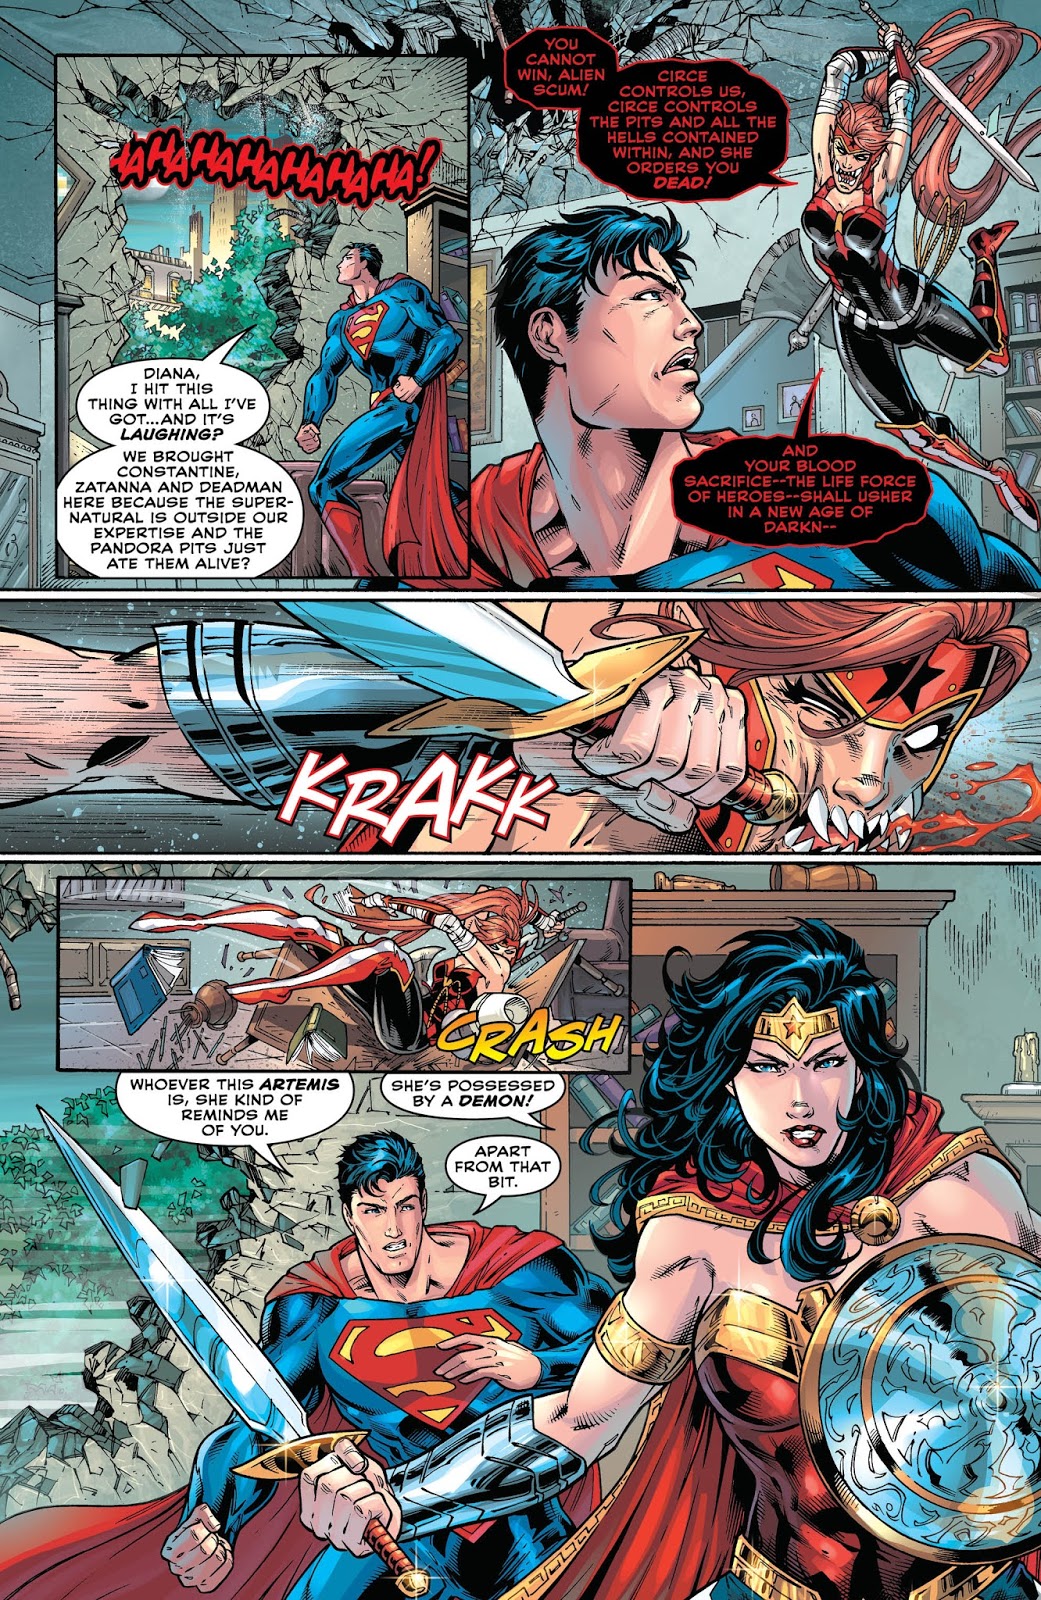 Weird Science DC Comics: Trinity #13 Review